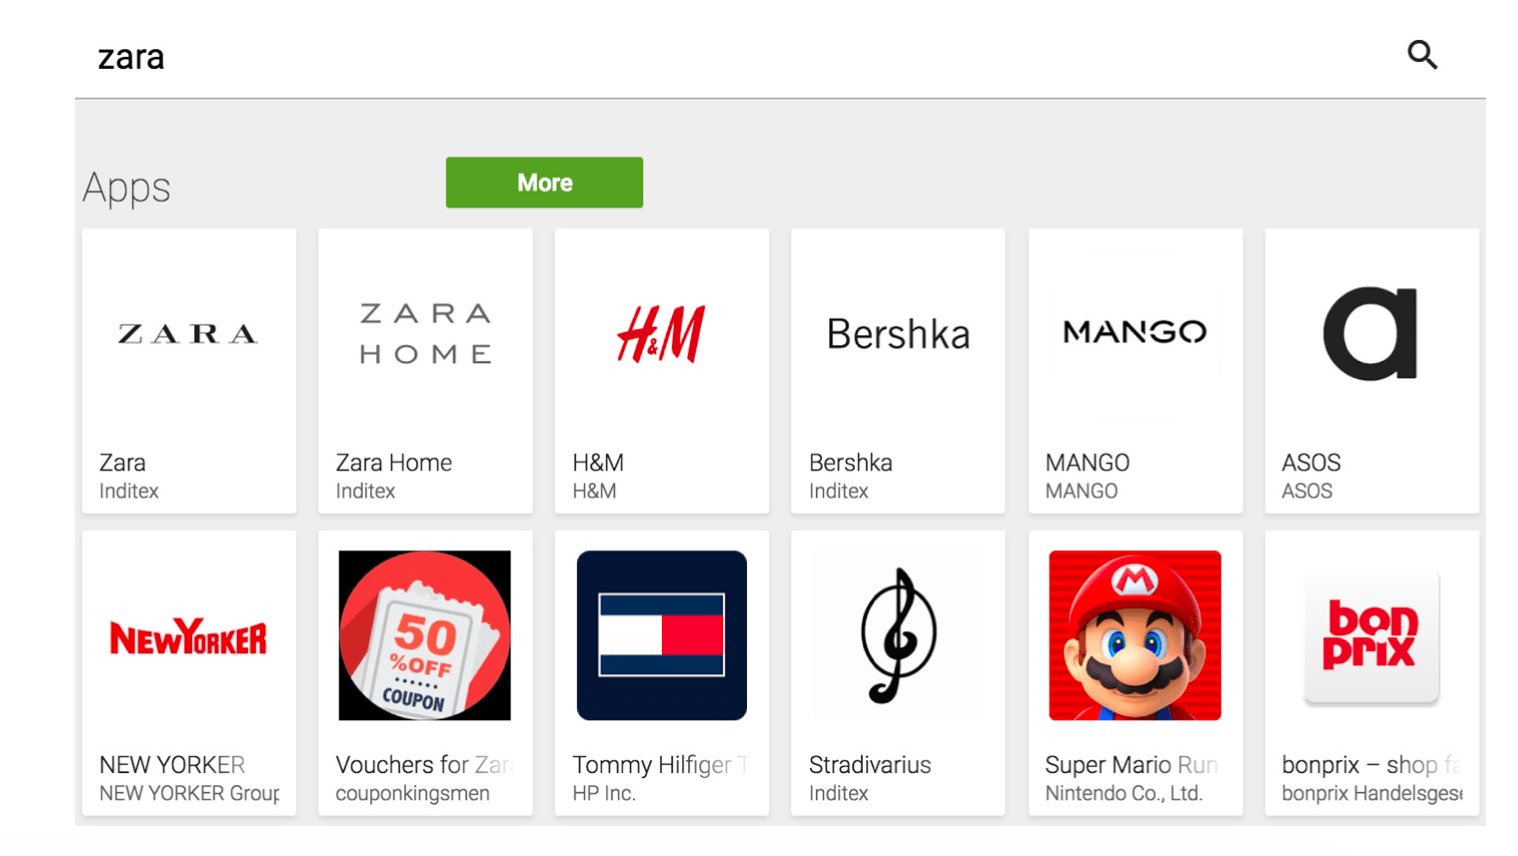 Screenshot: Google Play keyword search for Zara showing Super Mario Run 